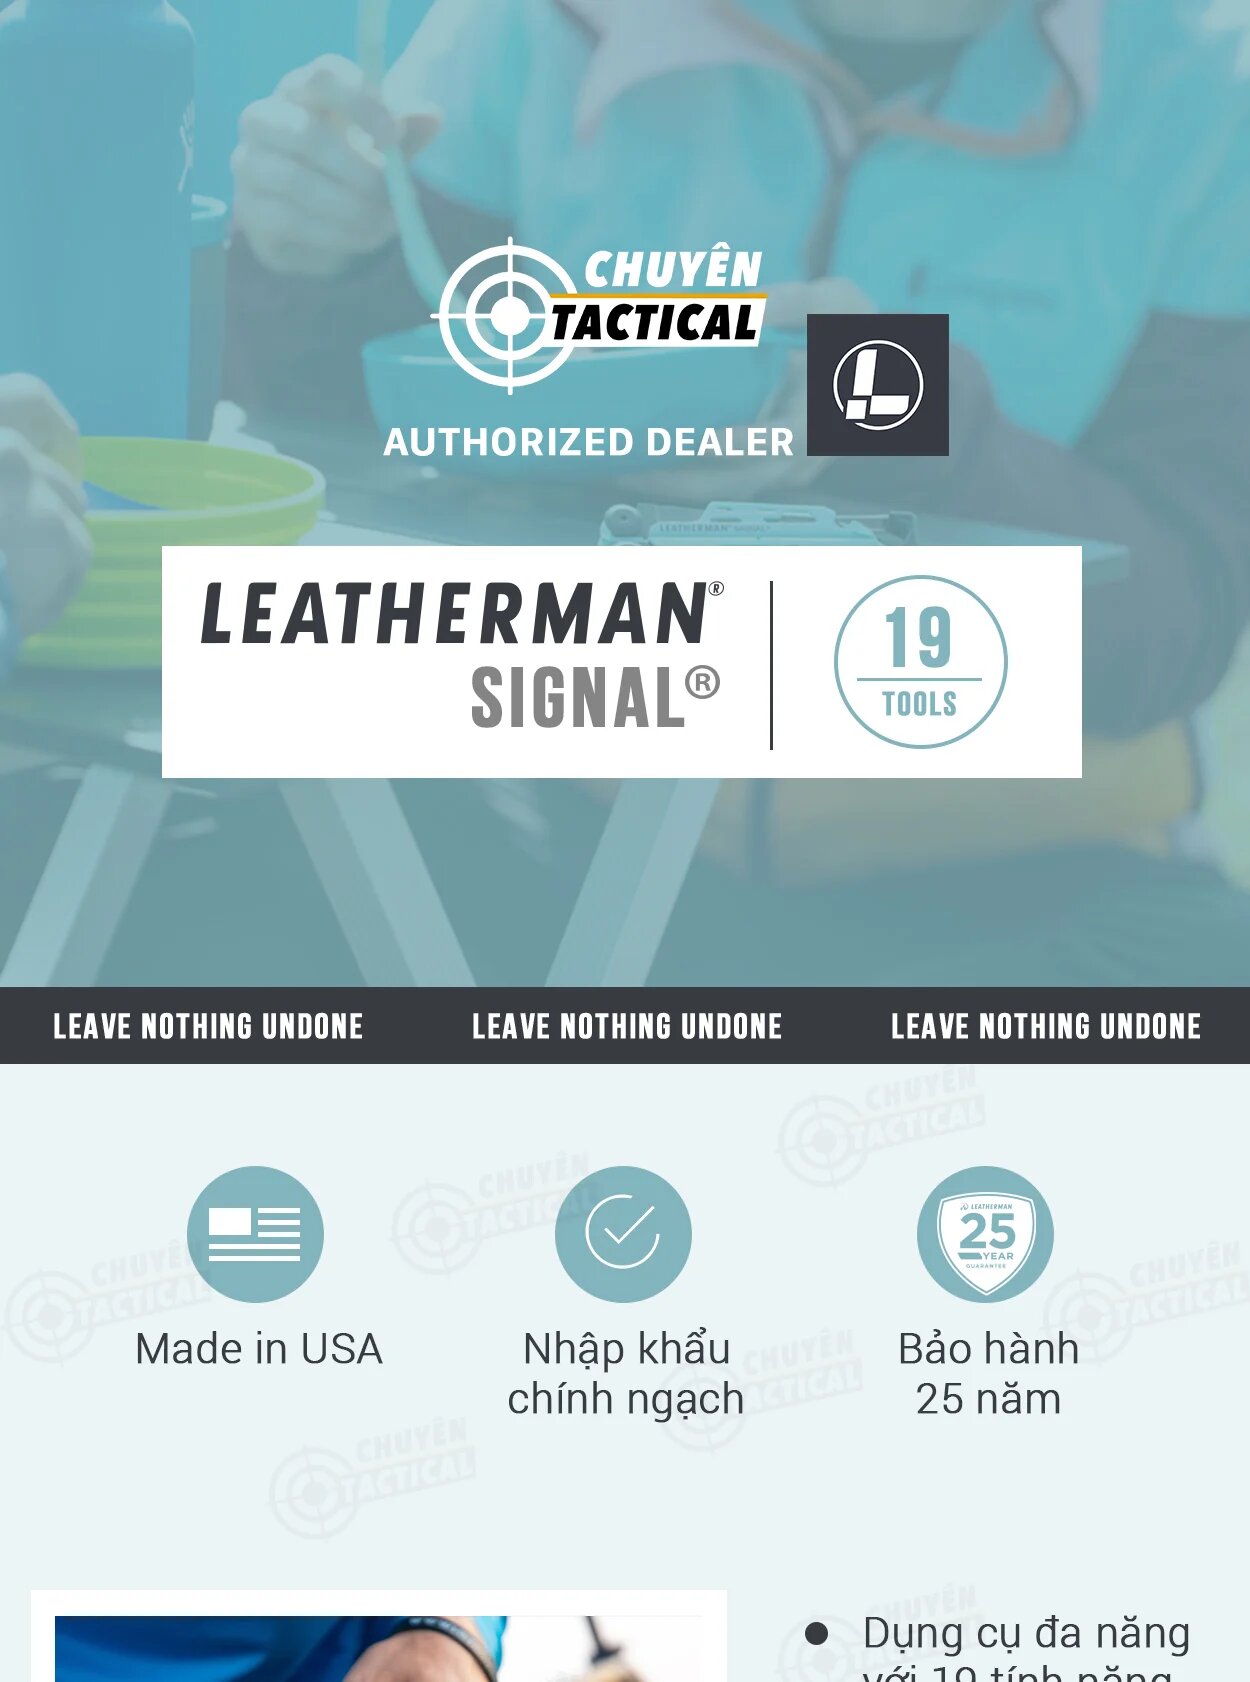 Leatherman signal